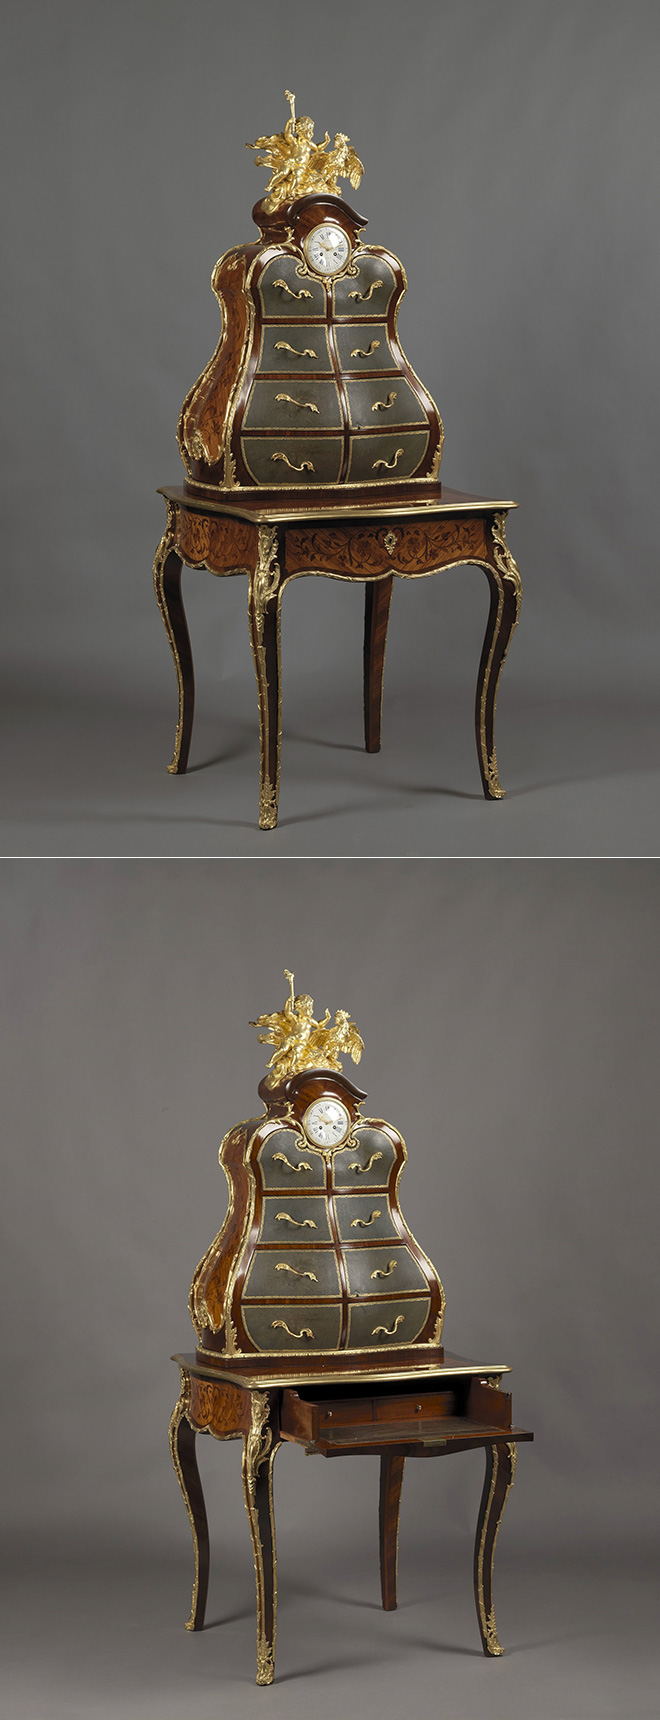 Secrétaire cartonnier vers 1880 style Louis XV - © Adian Alan